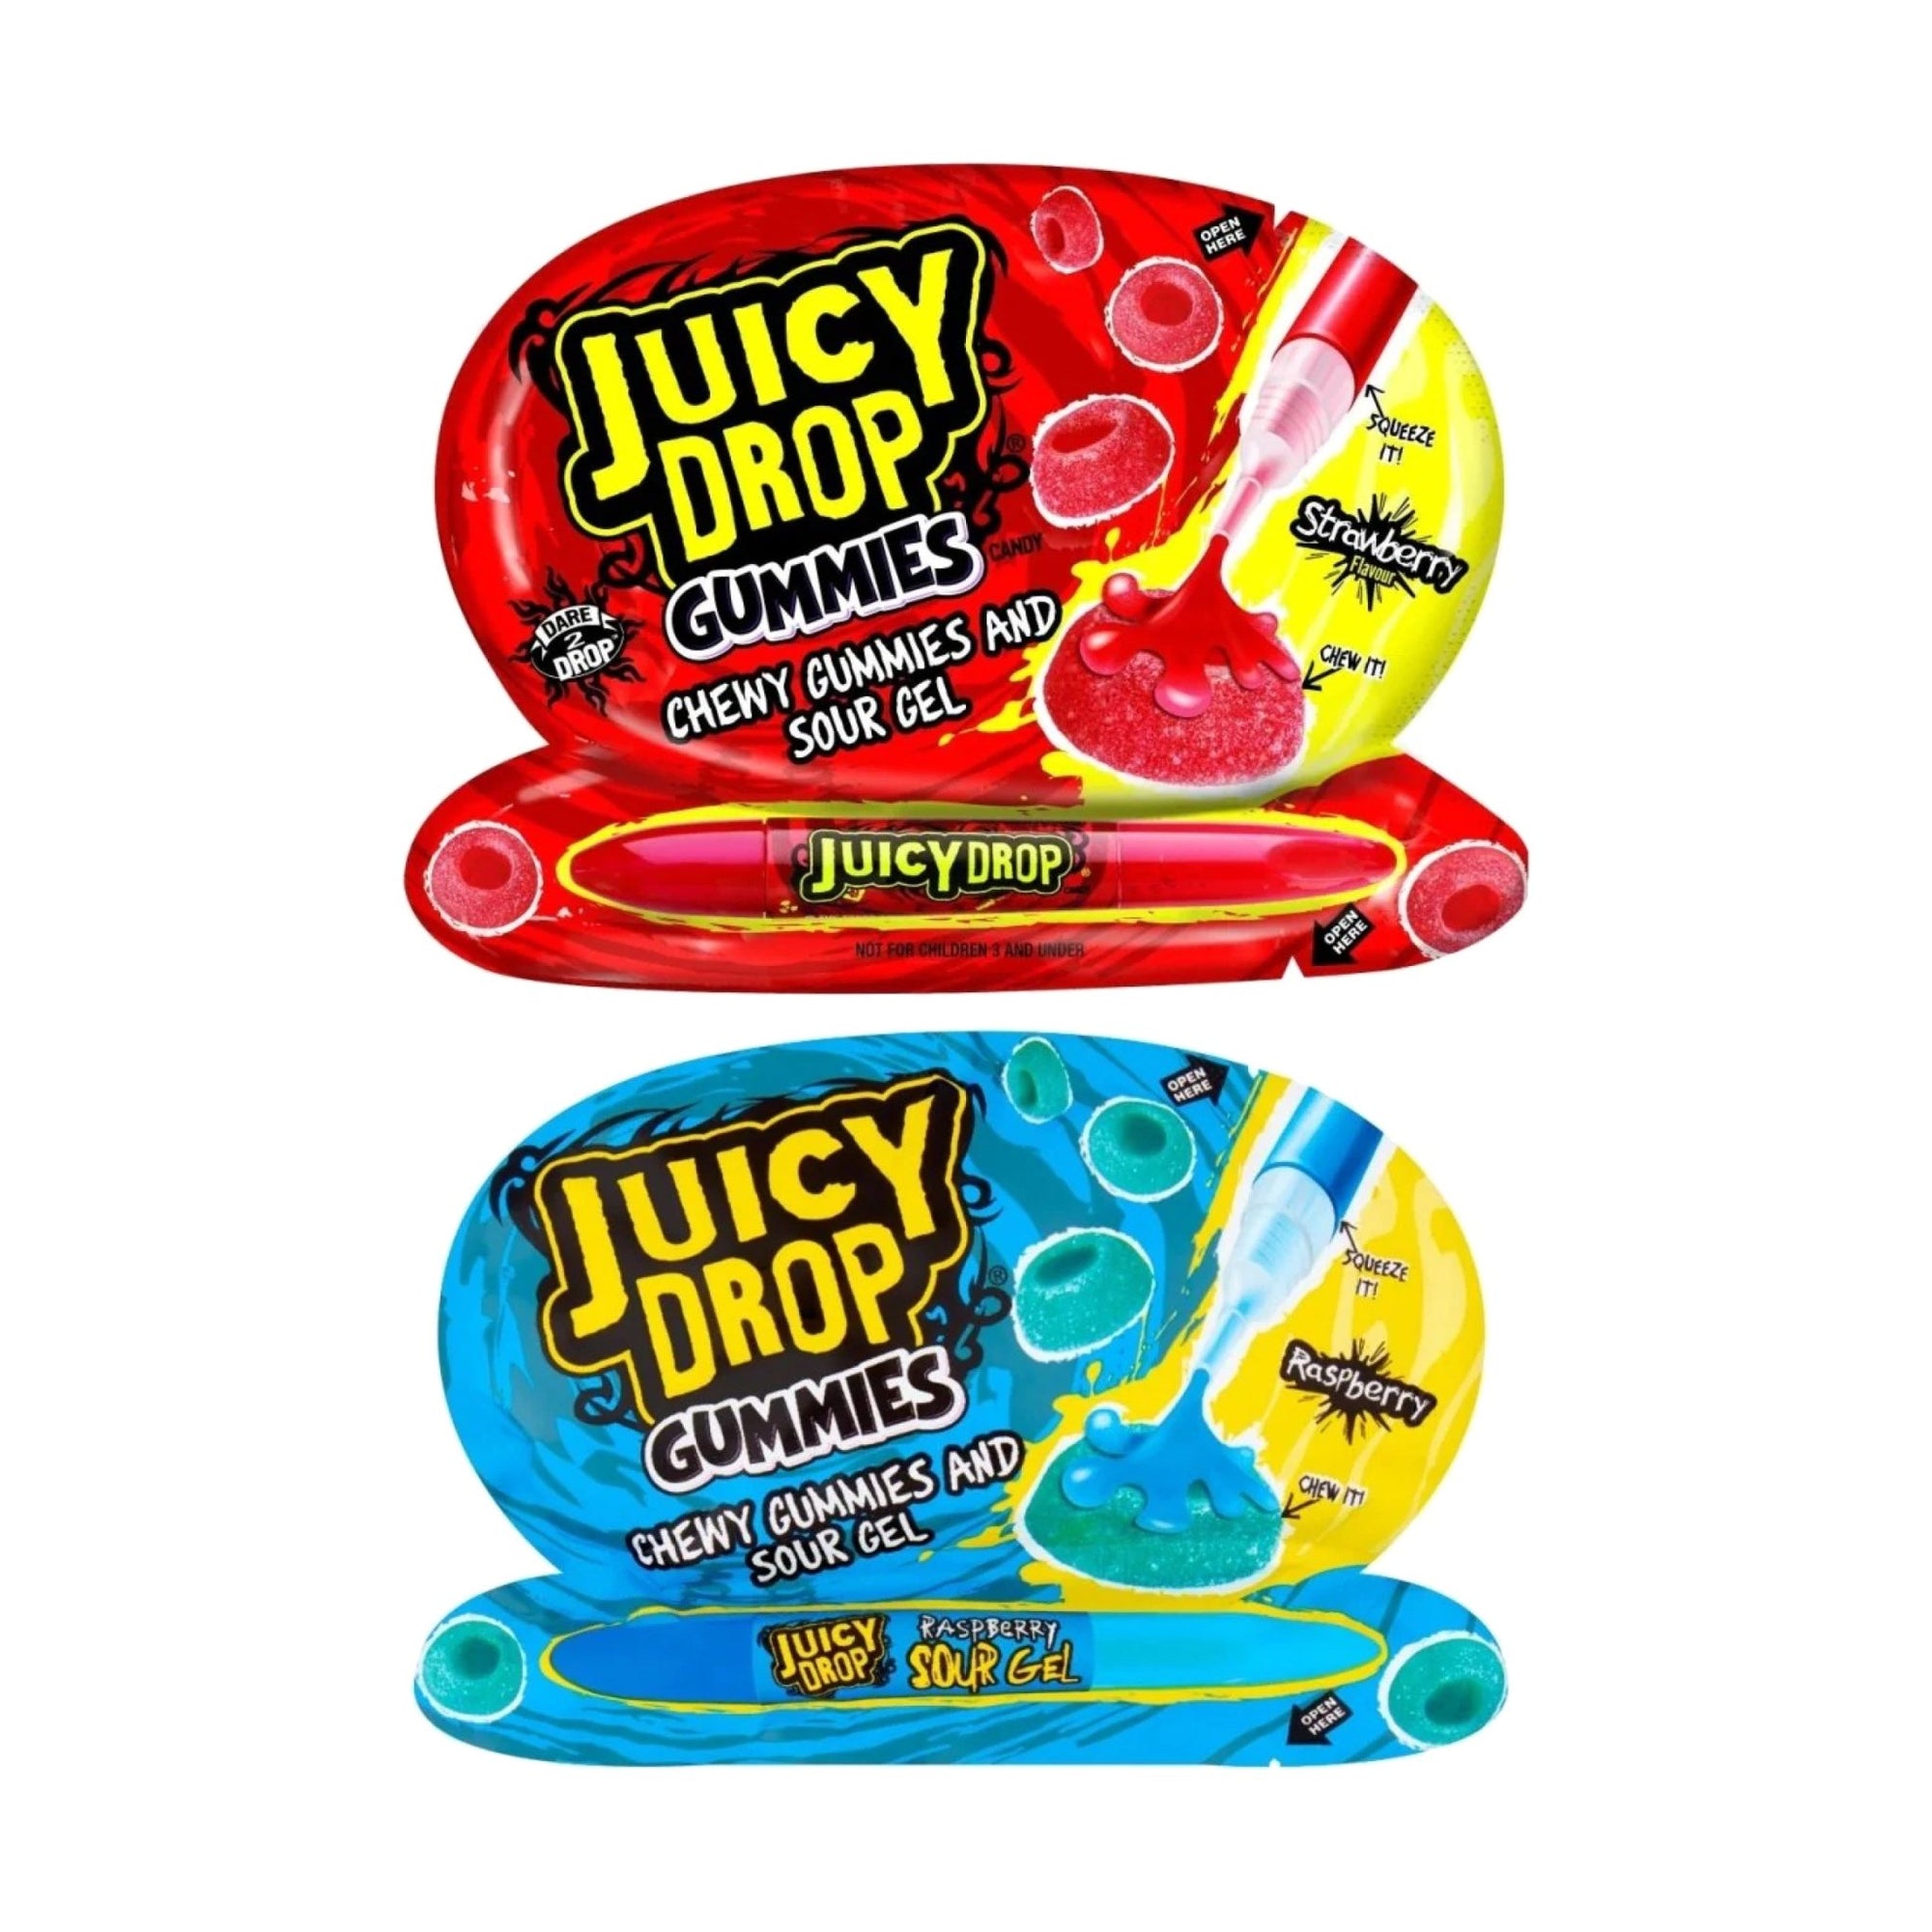 Juicy Drop Gummies & Sour Gel 57 g - Fast Candy